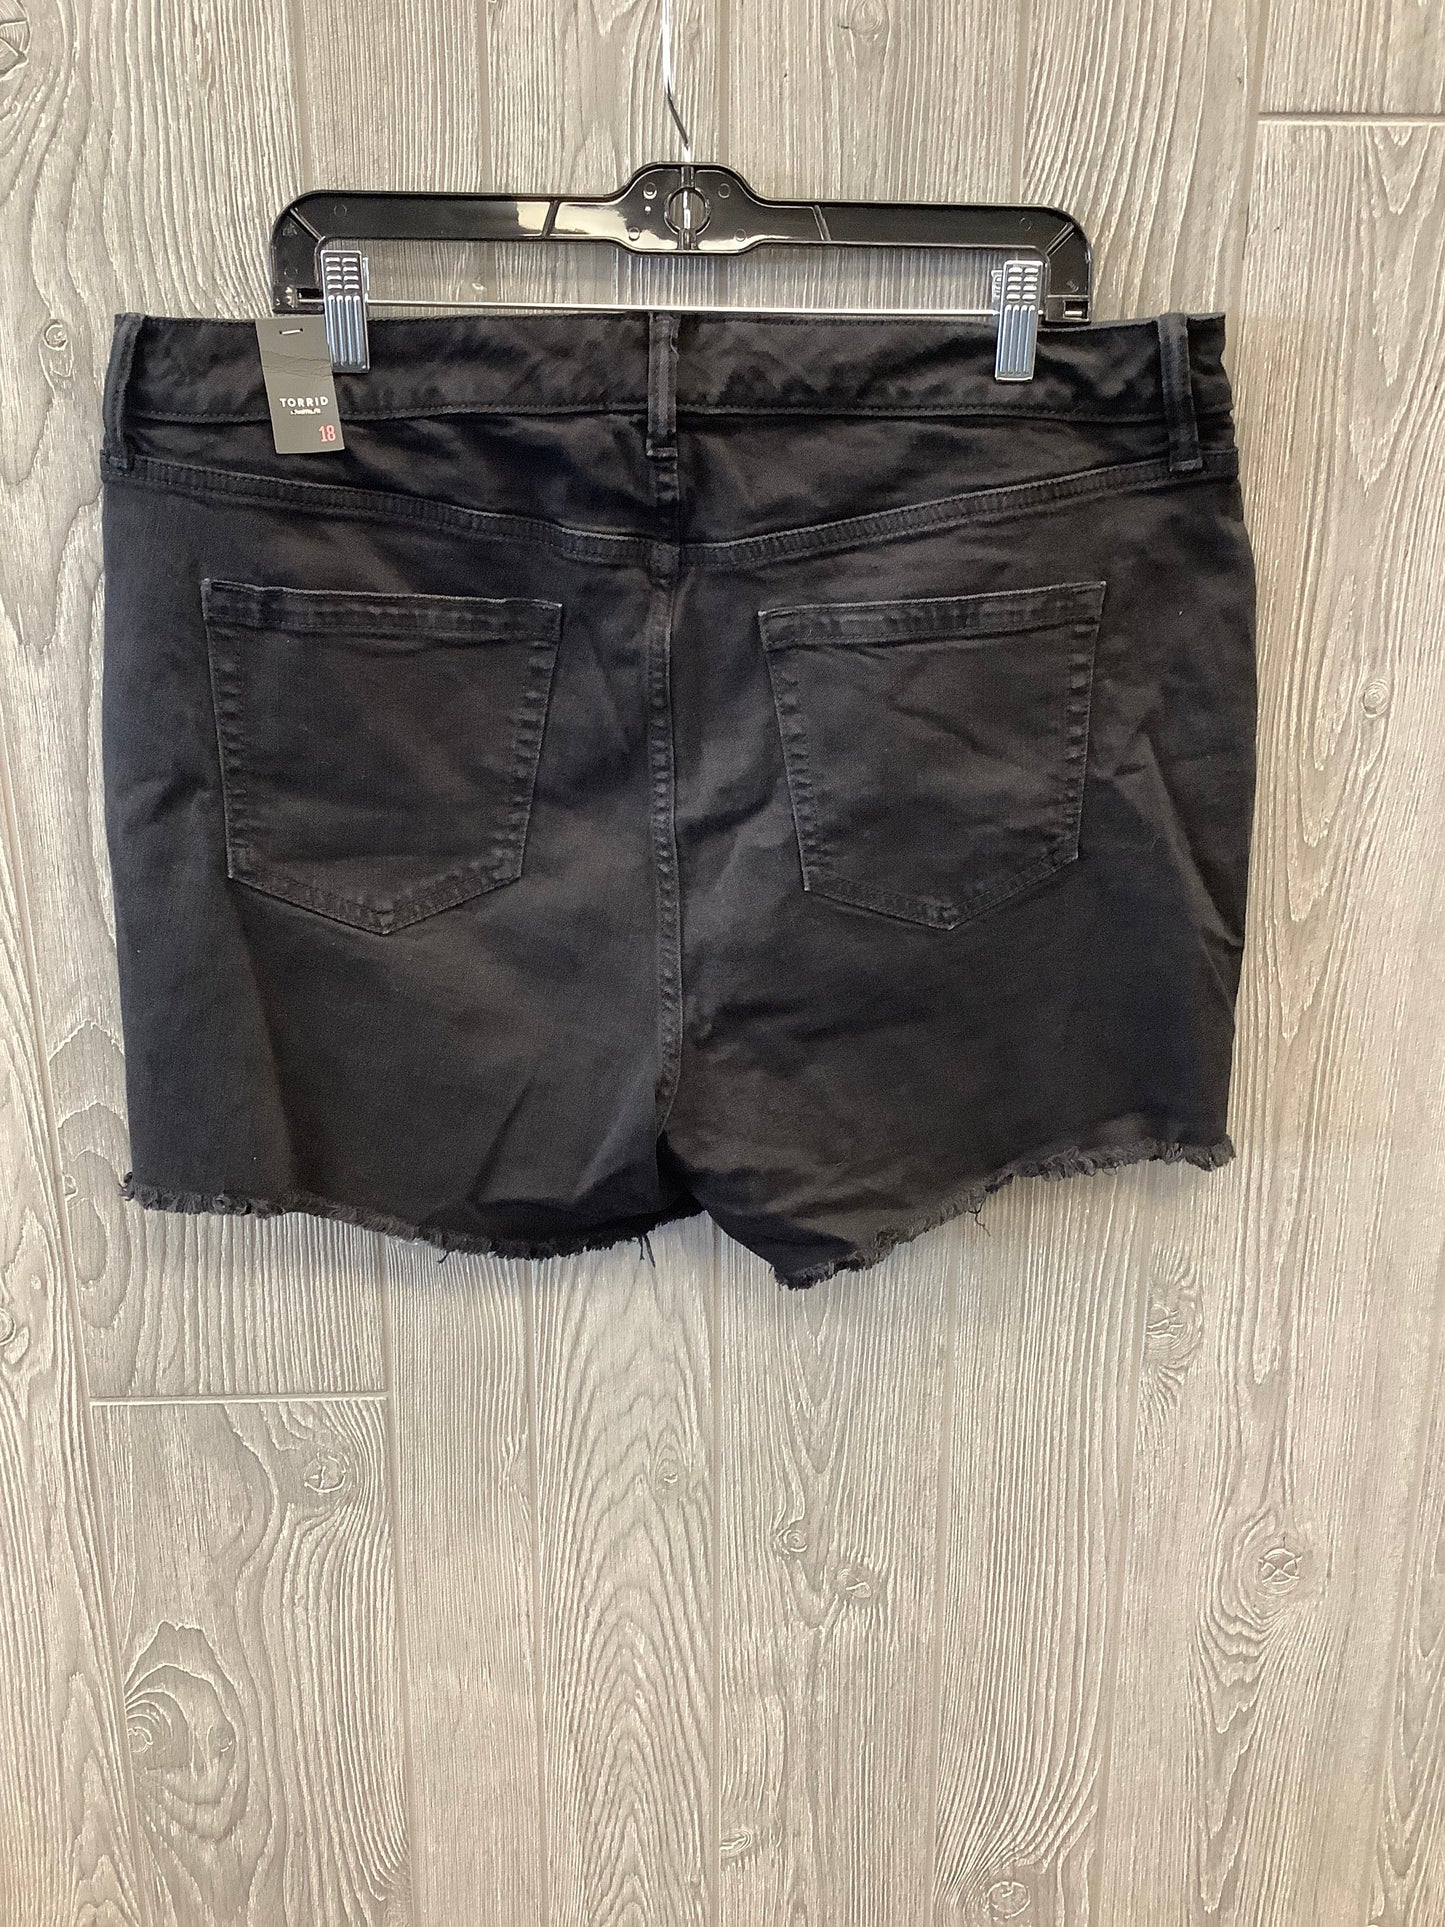 Black Shorts Torrid, Size 18